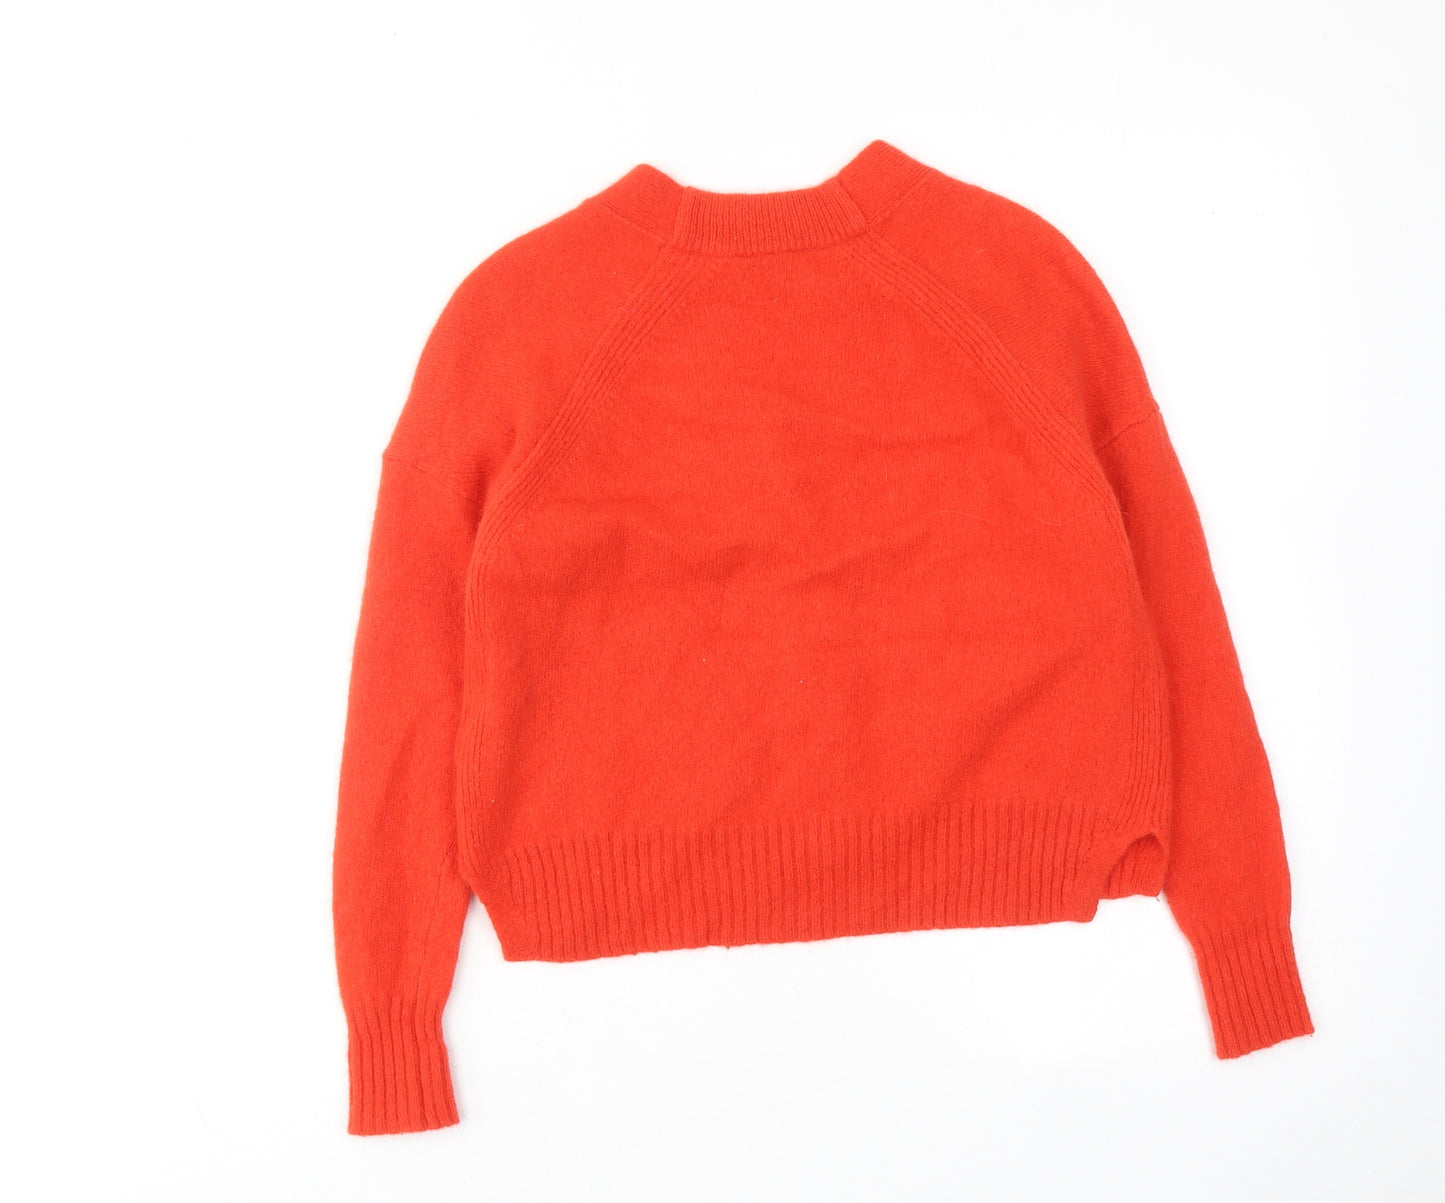 Whistles Womens Orange V-Neck Wool Cardigan Jumper Size XS